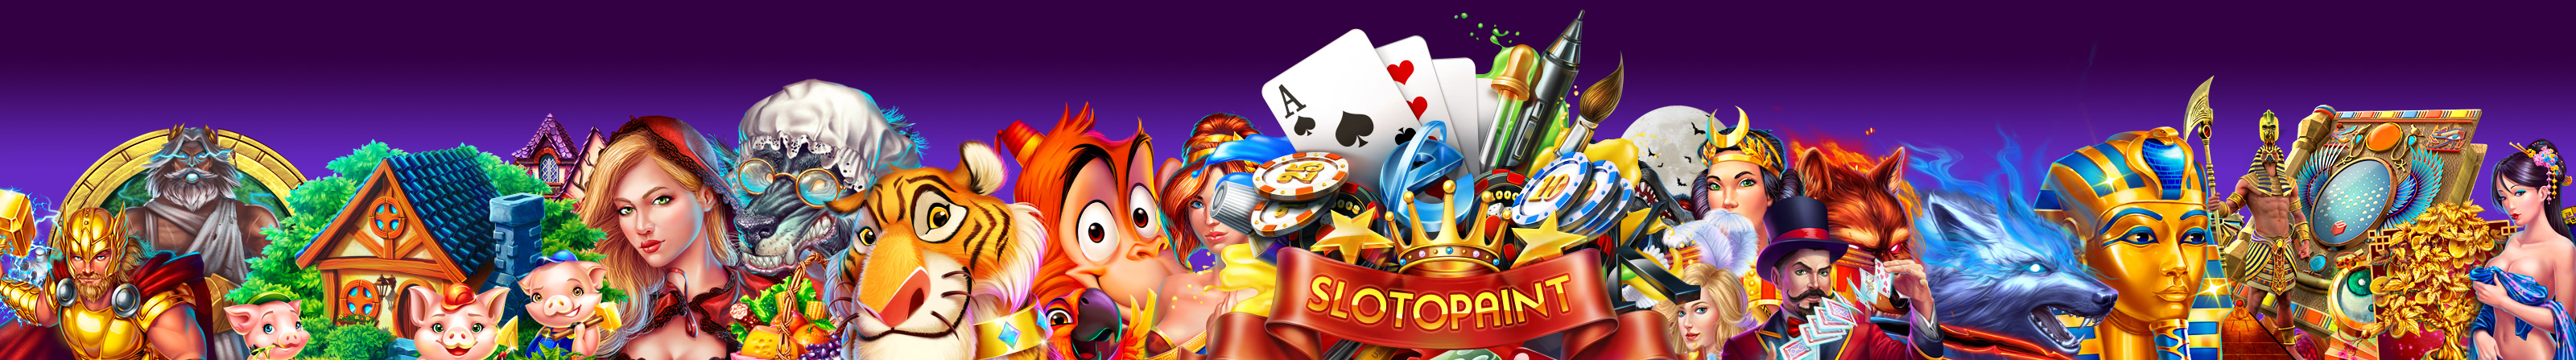 Banner de perfil de Slotopaint Game Design Studio